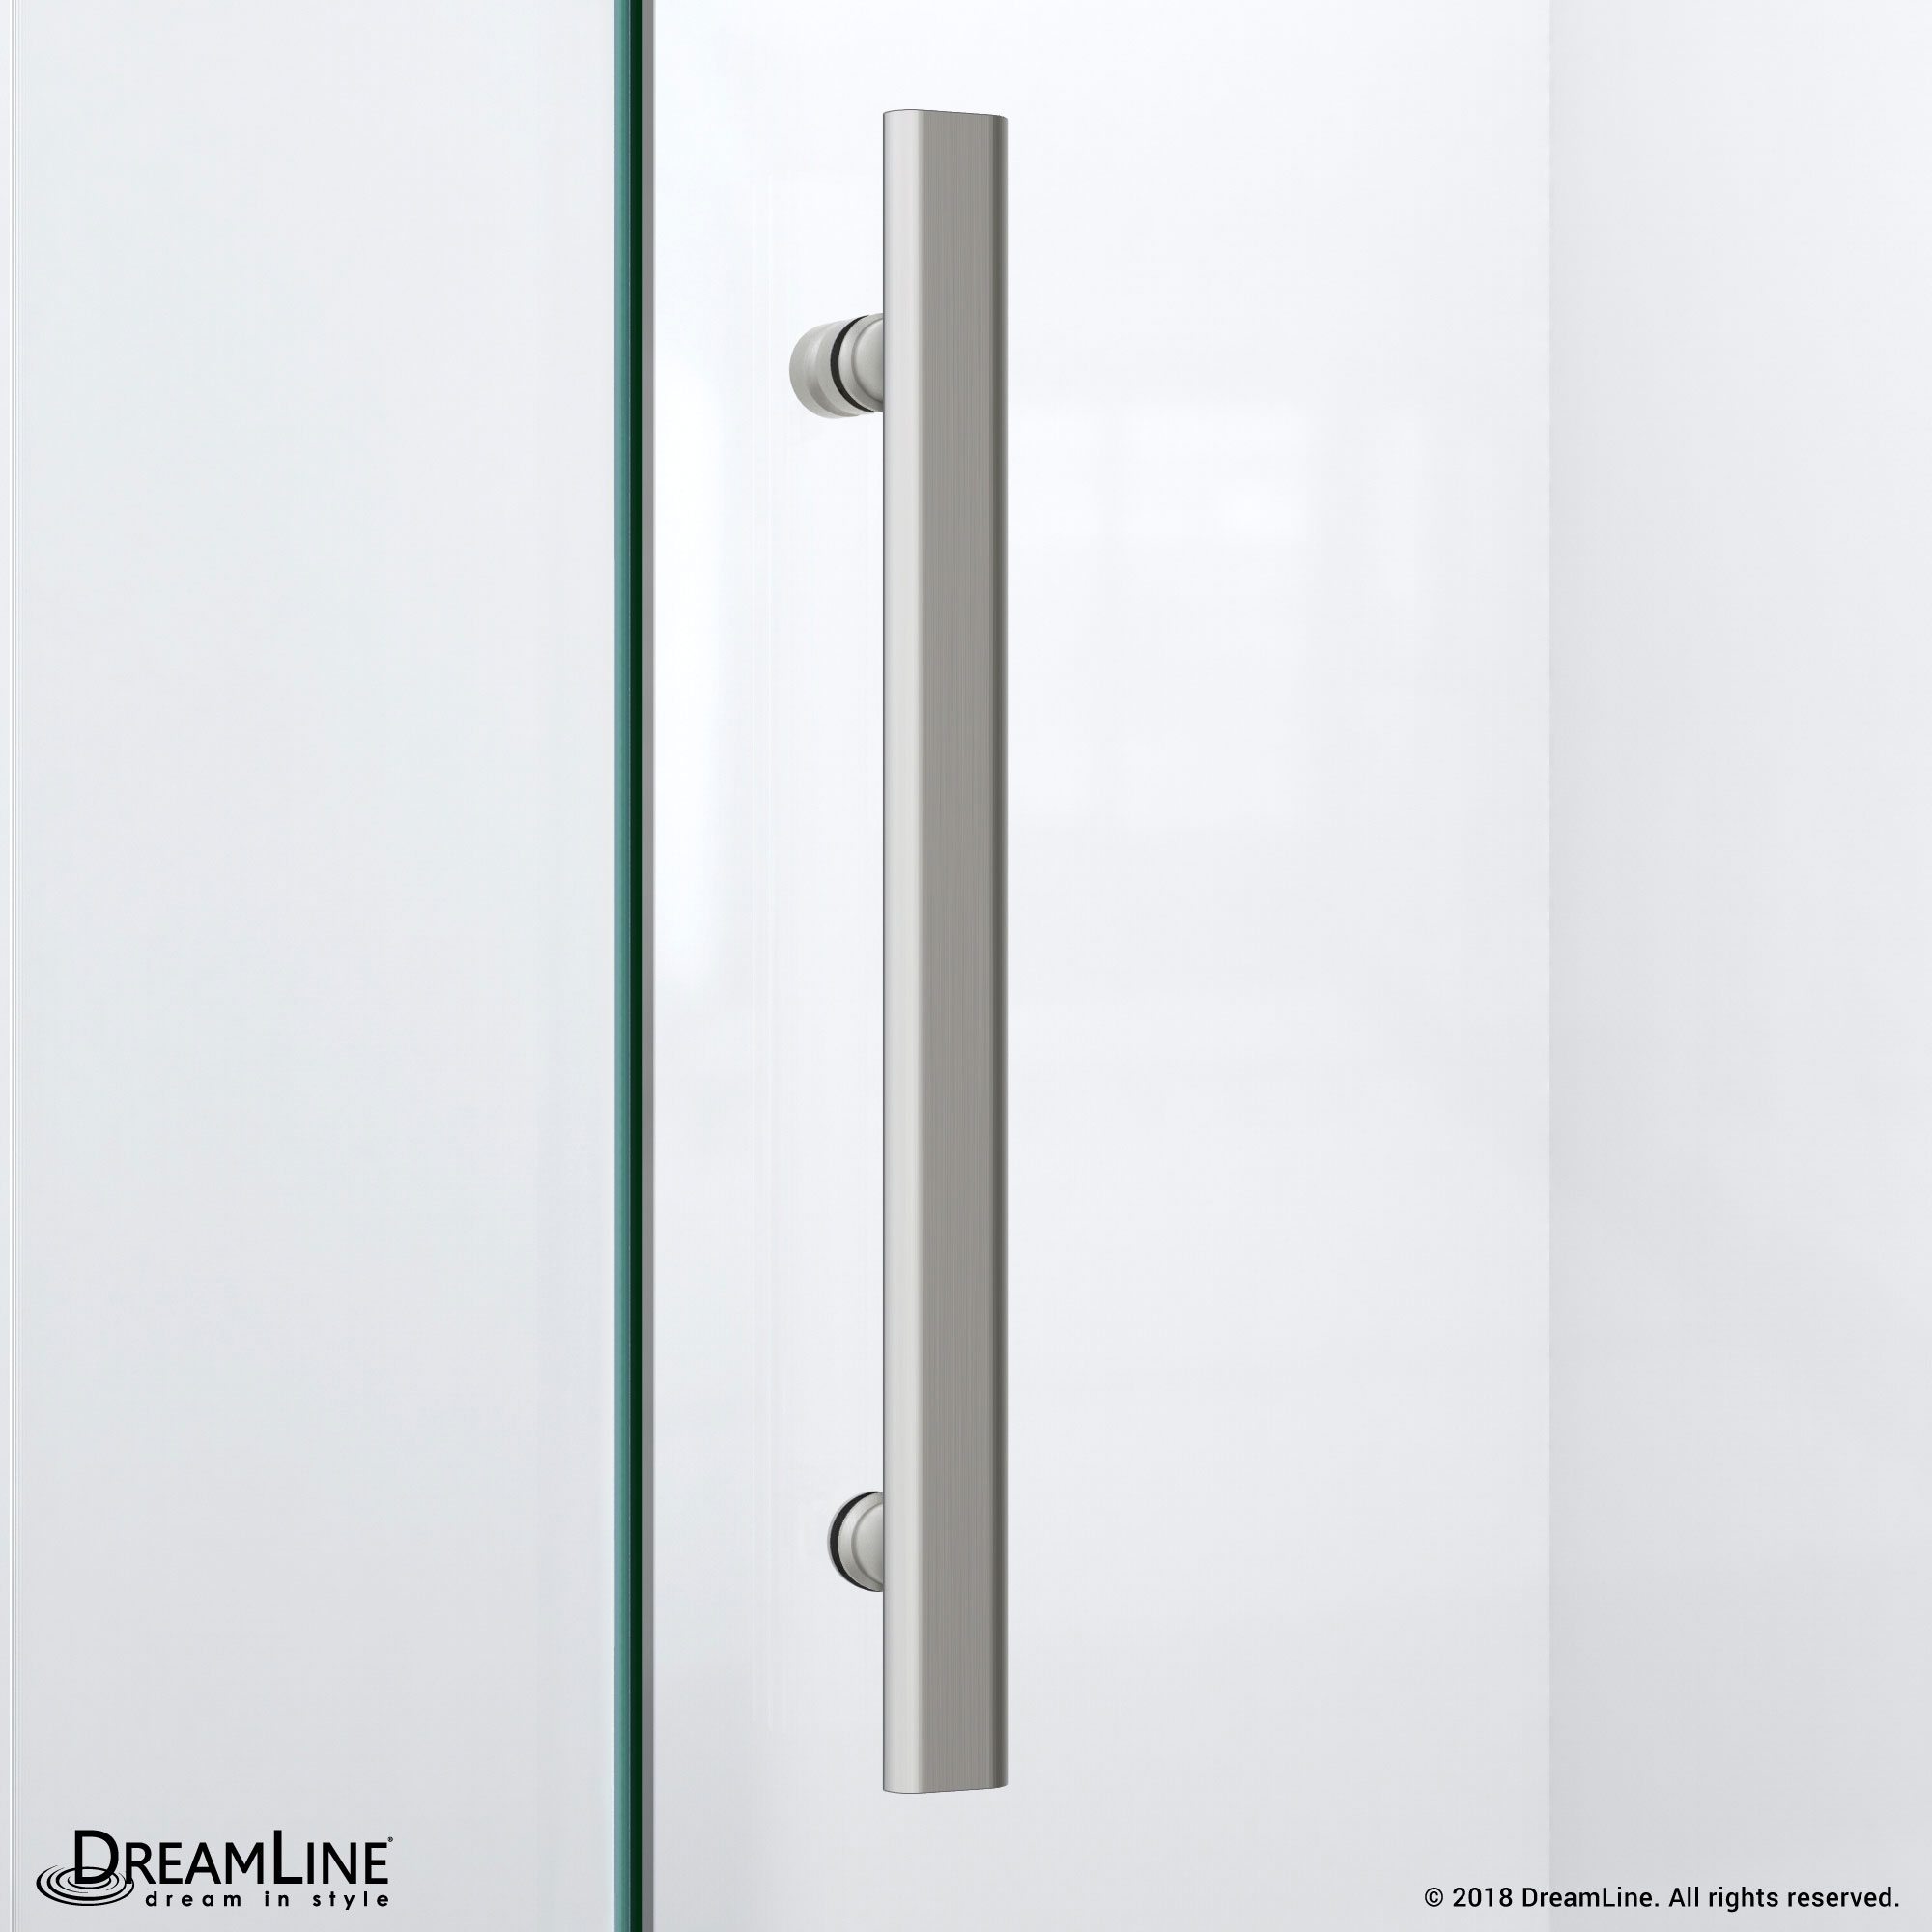 PrismLux 34-5/16" x 34-5/16" Frameless Hinged Shower Enclosure, Clear 3/8" Glass Shower, Brushed Nickel